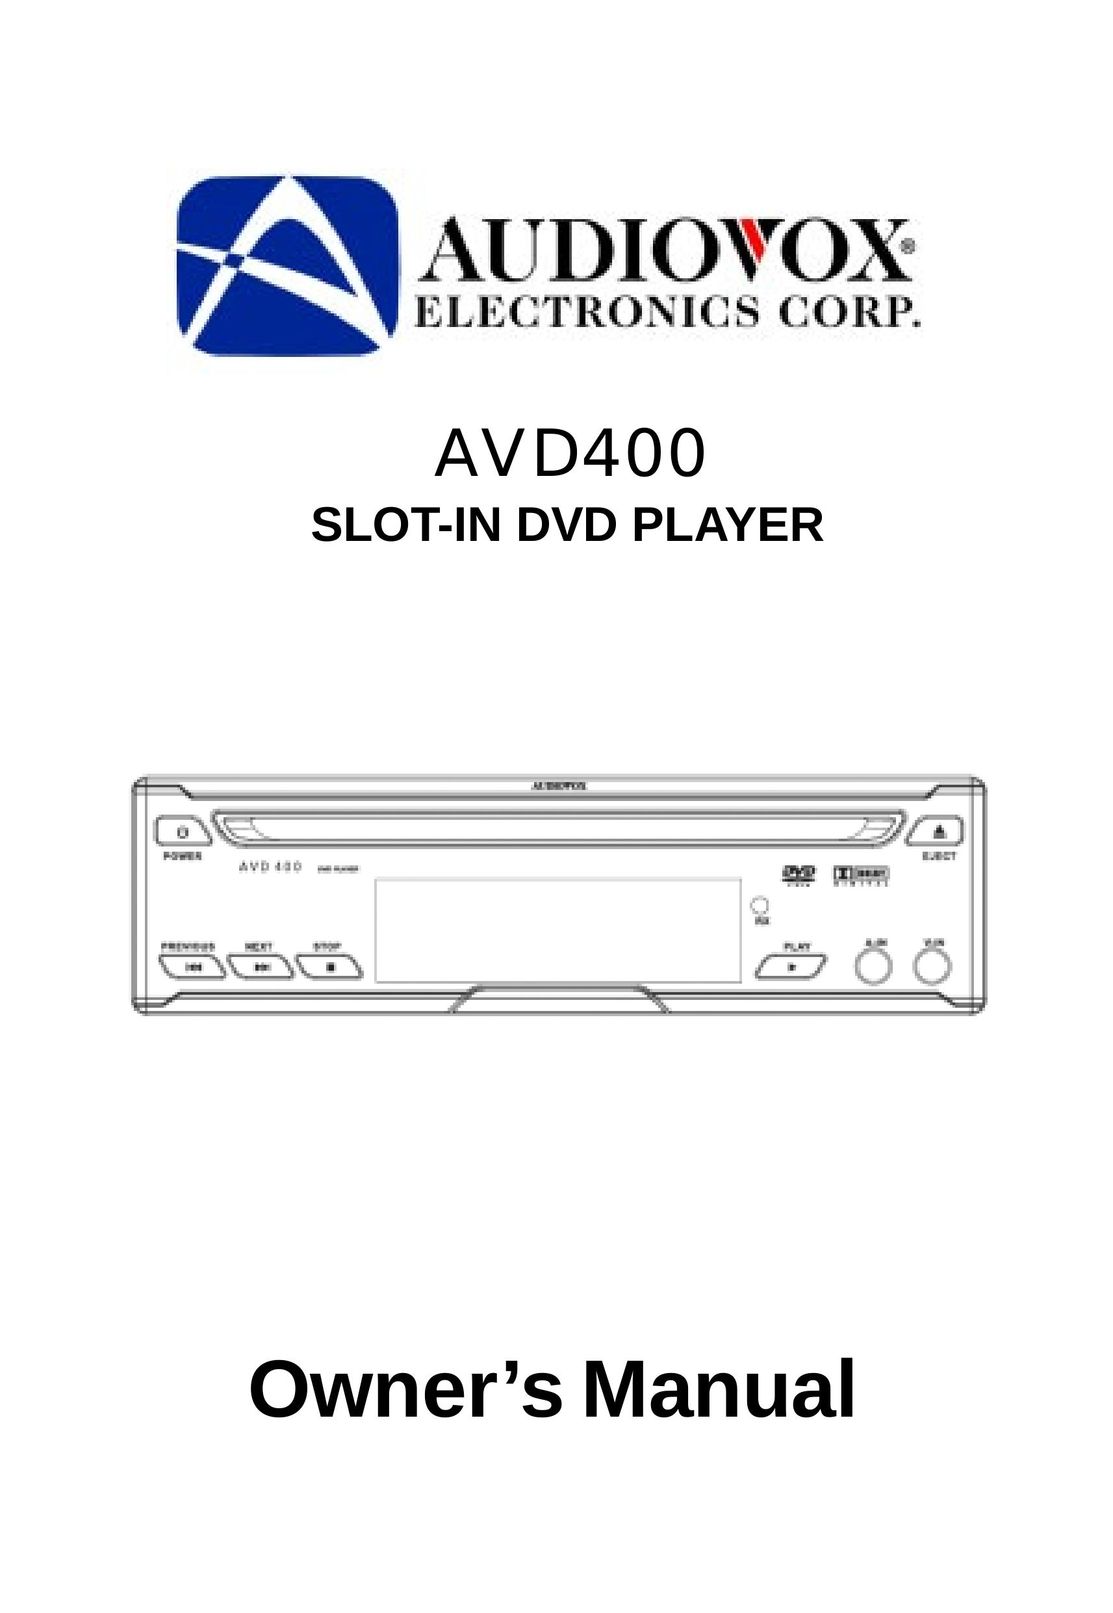 Audiovox AVD400 DVD Player User Manual